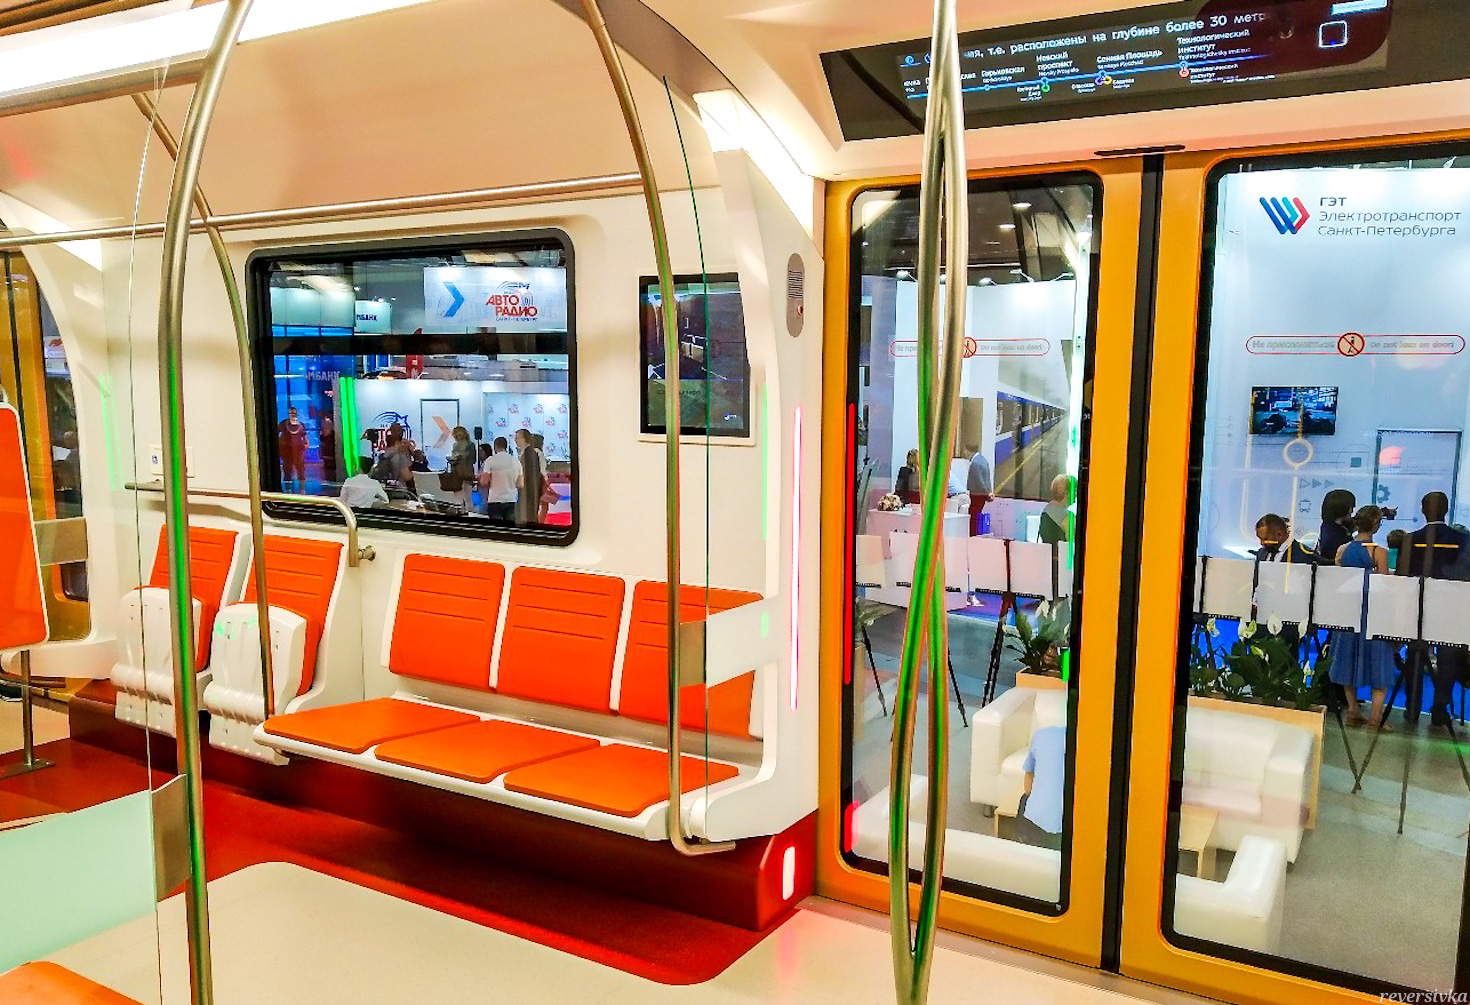 Sankt Peterburgas — Metro — Other; Sankt Peterburgas — SmartTRANSPORT 2019